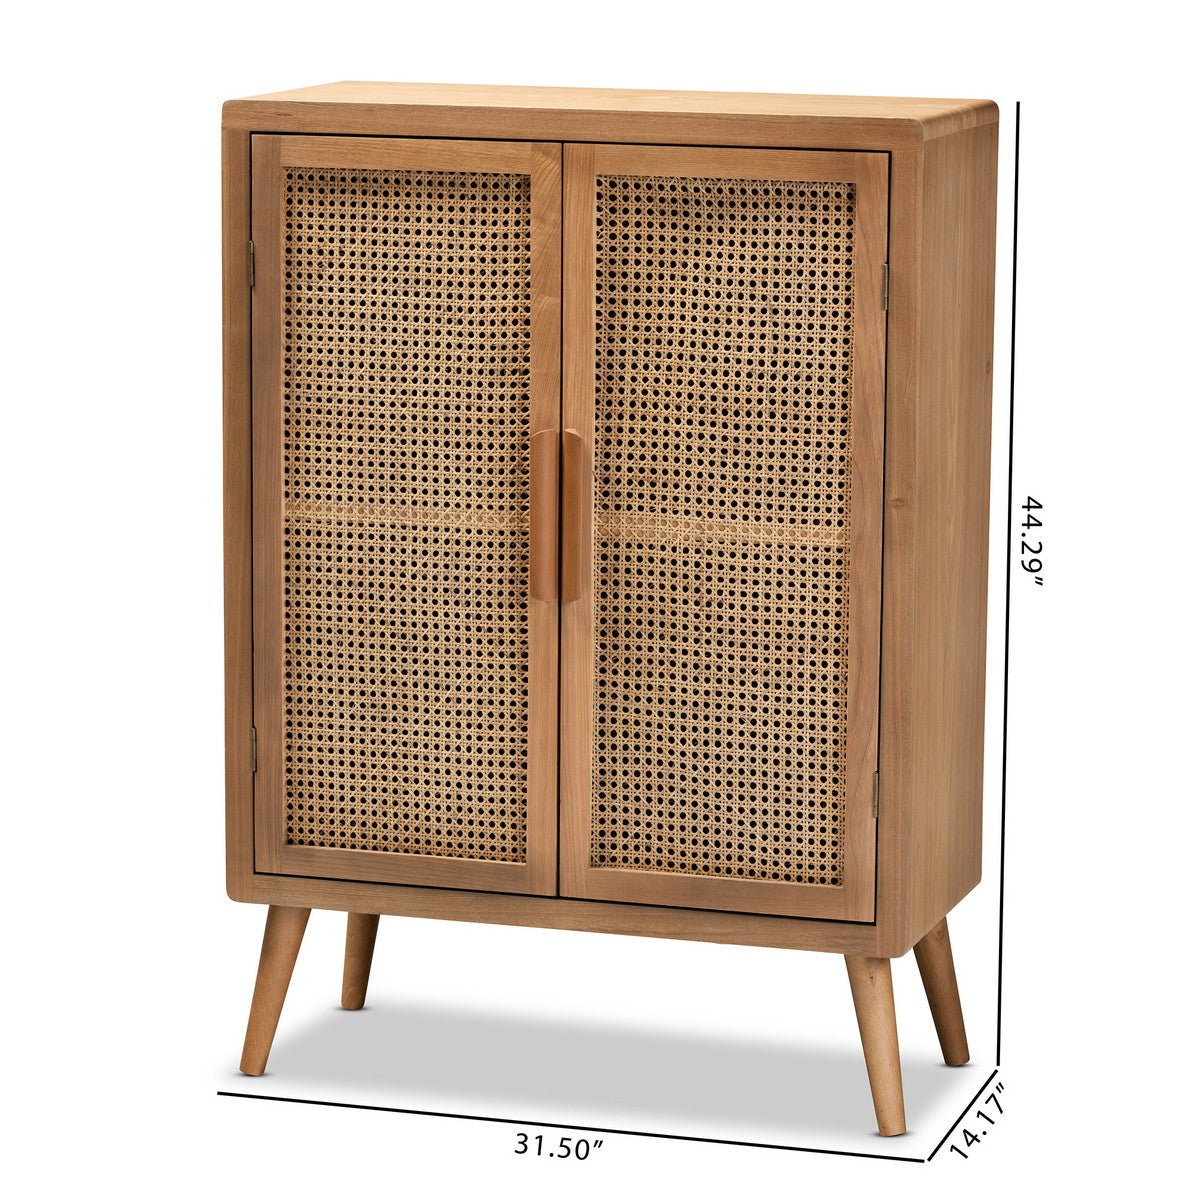 Baxton Studio Alina Mid-Century Modern Medium Oak Finished Wood and Rattan 2-Door Accent Storage Cabinet